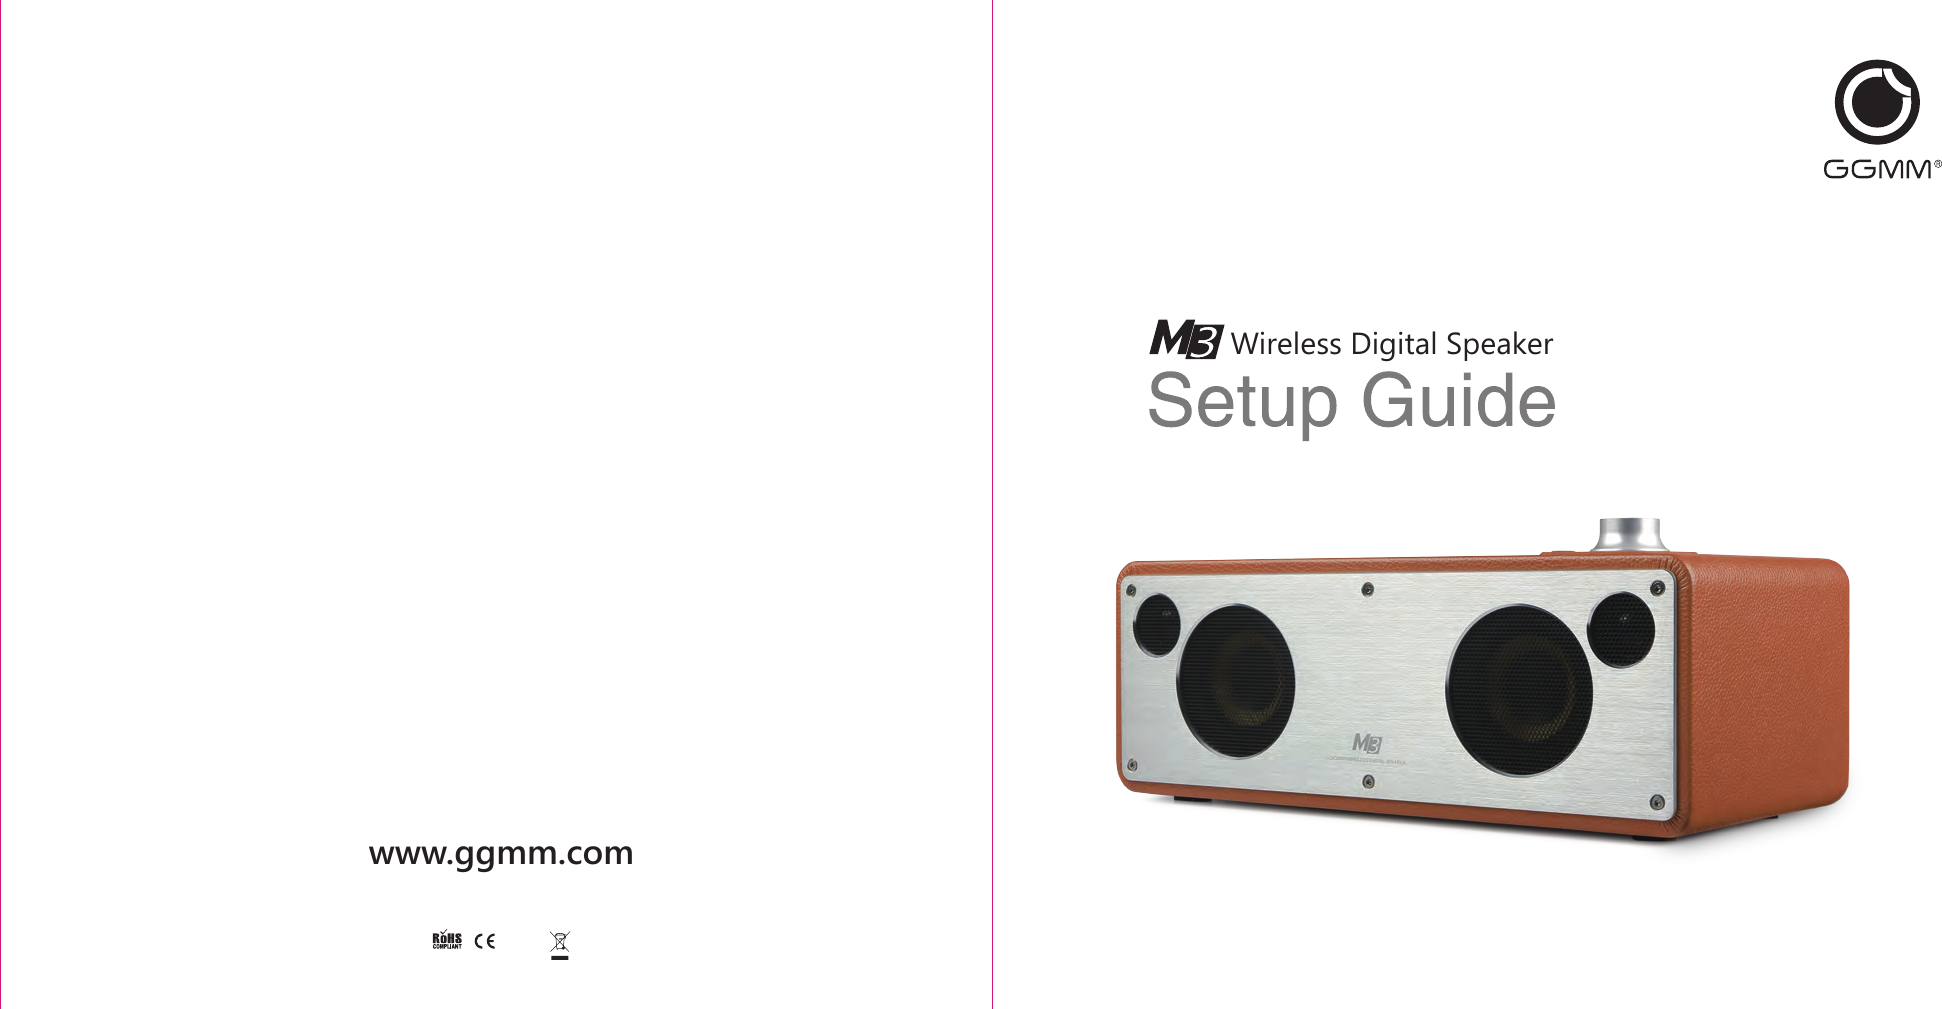 GGMM M3 Wireless Digital Speaker User Manual